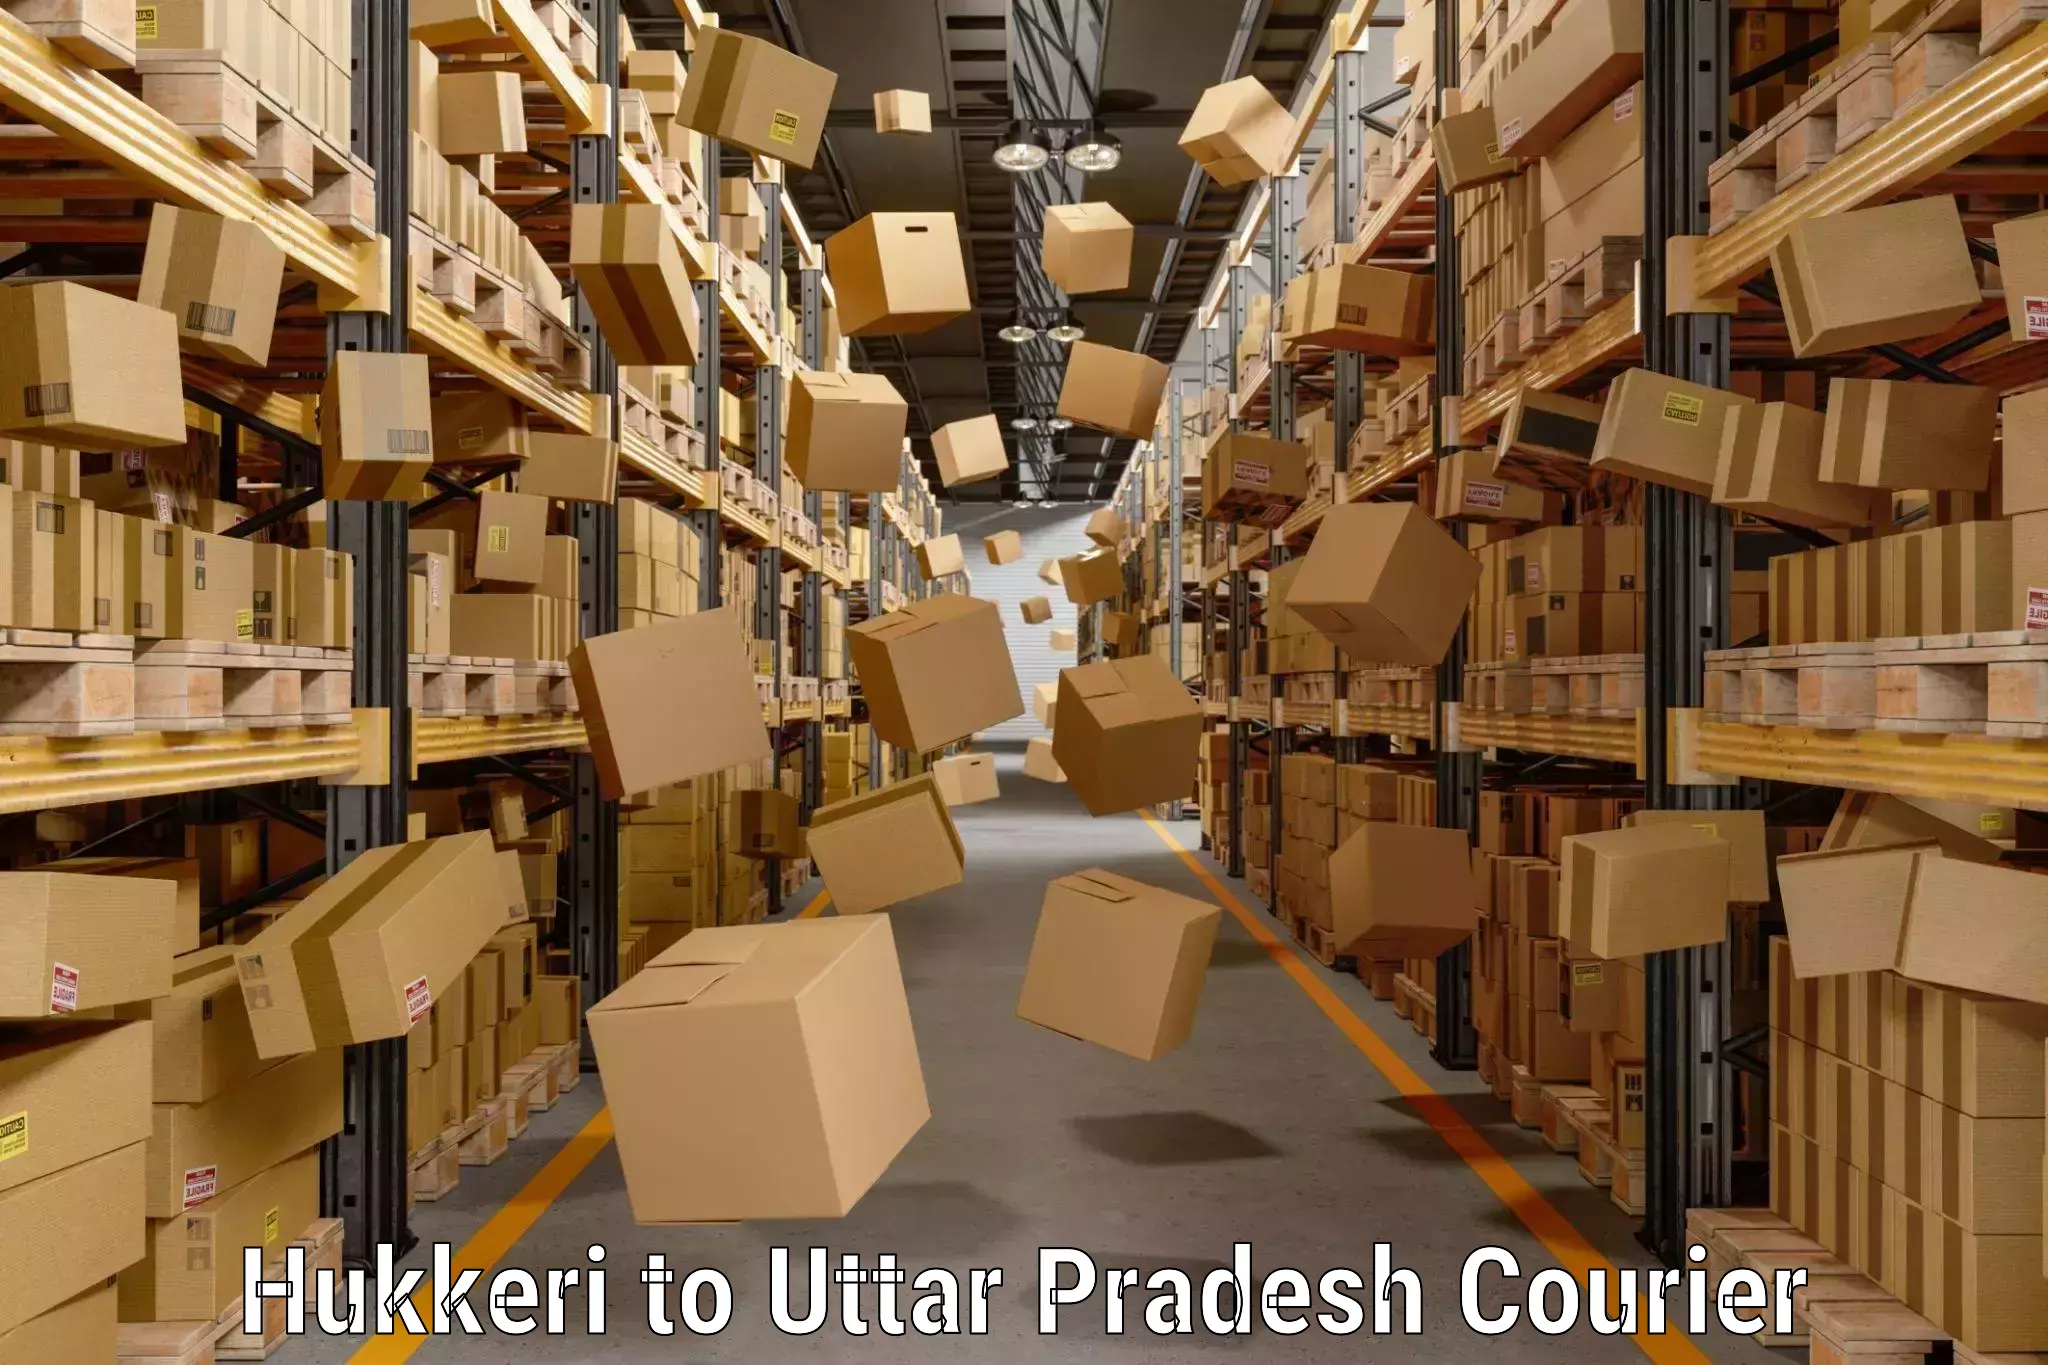 Luggage delivery network Hukkeri to Uttar Pradesh